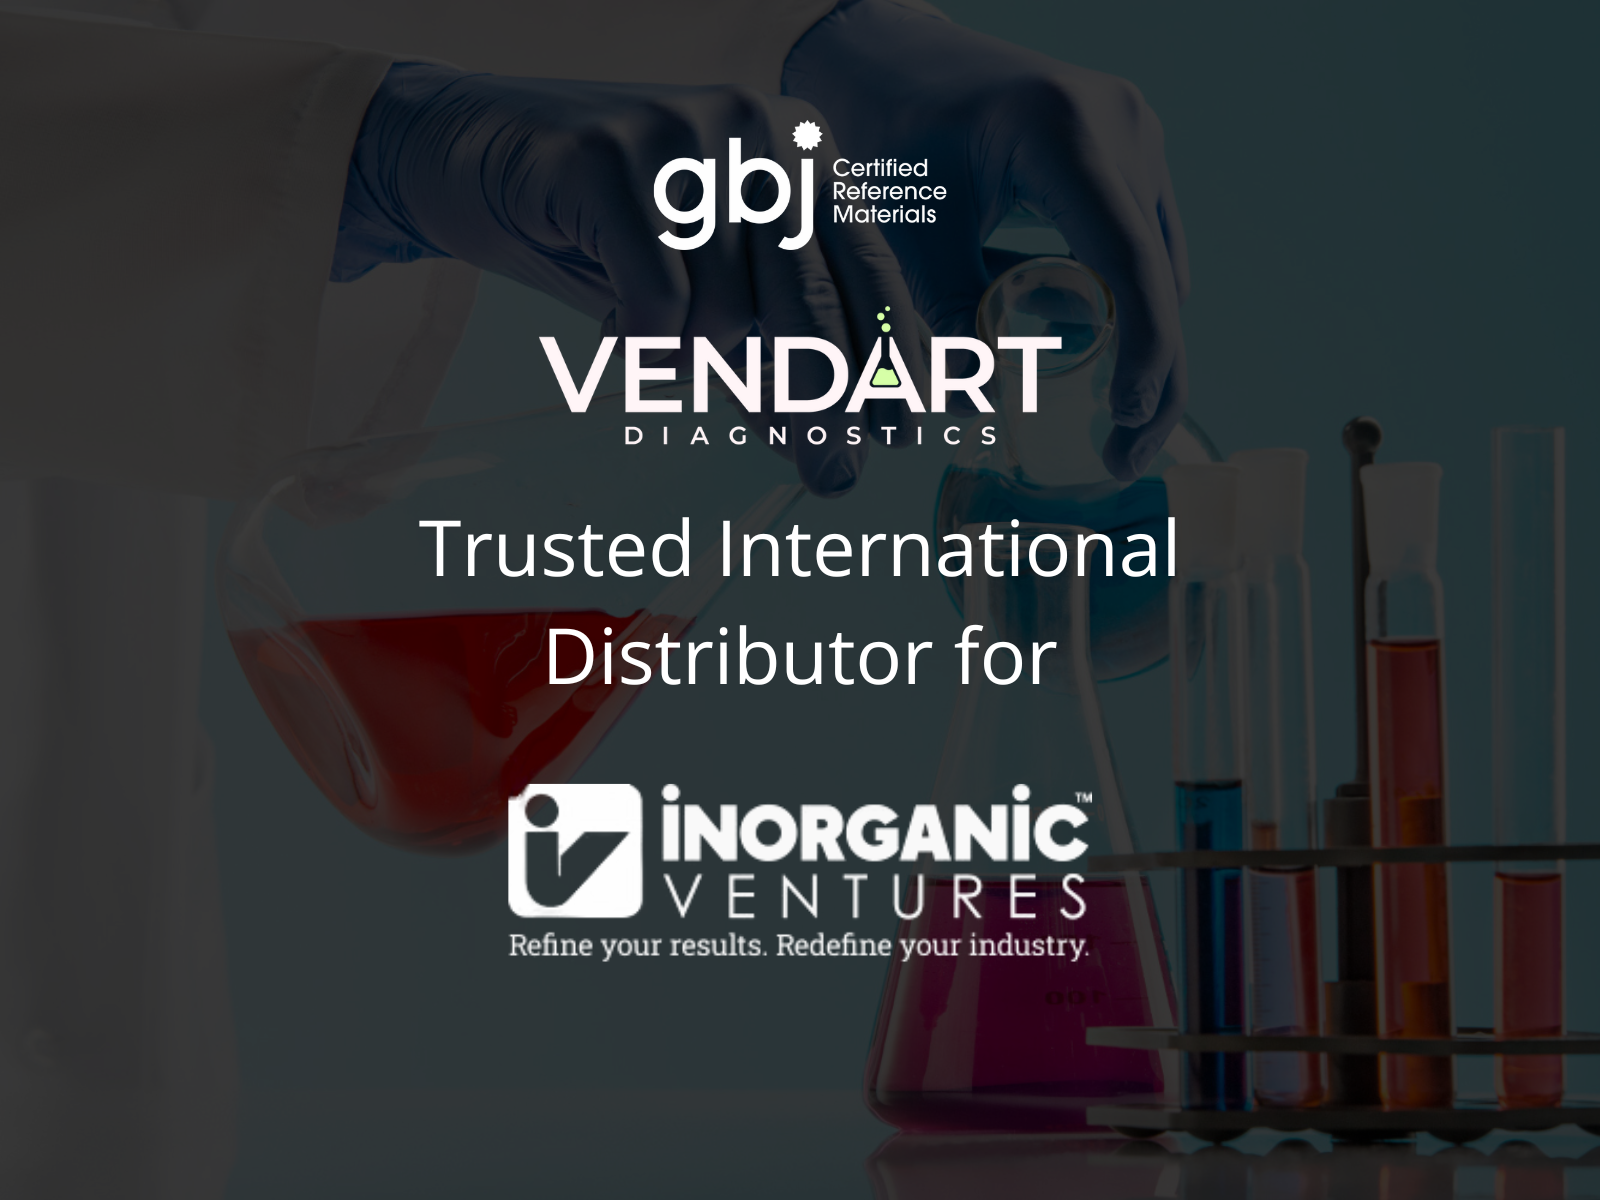 Vendart: Your Trusted International Distributor of Inorganic Ventures in Australia